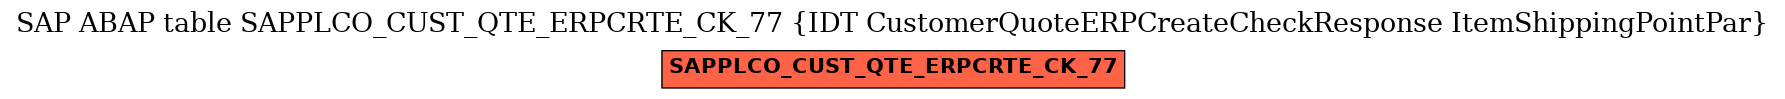 E-R Diagram for table SAPPLCO_CUST_QTE_ERPCRTE_CK_77 (IDT CustomerQuoteERPCreateCheckResponse ItemShippingPointPar)